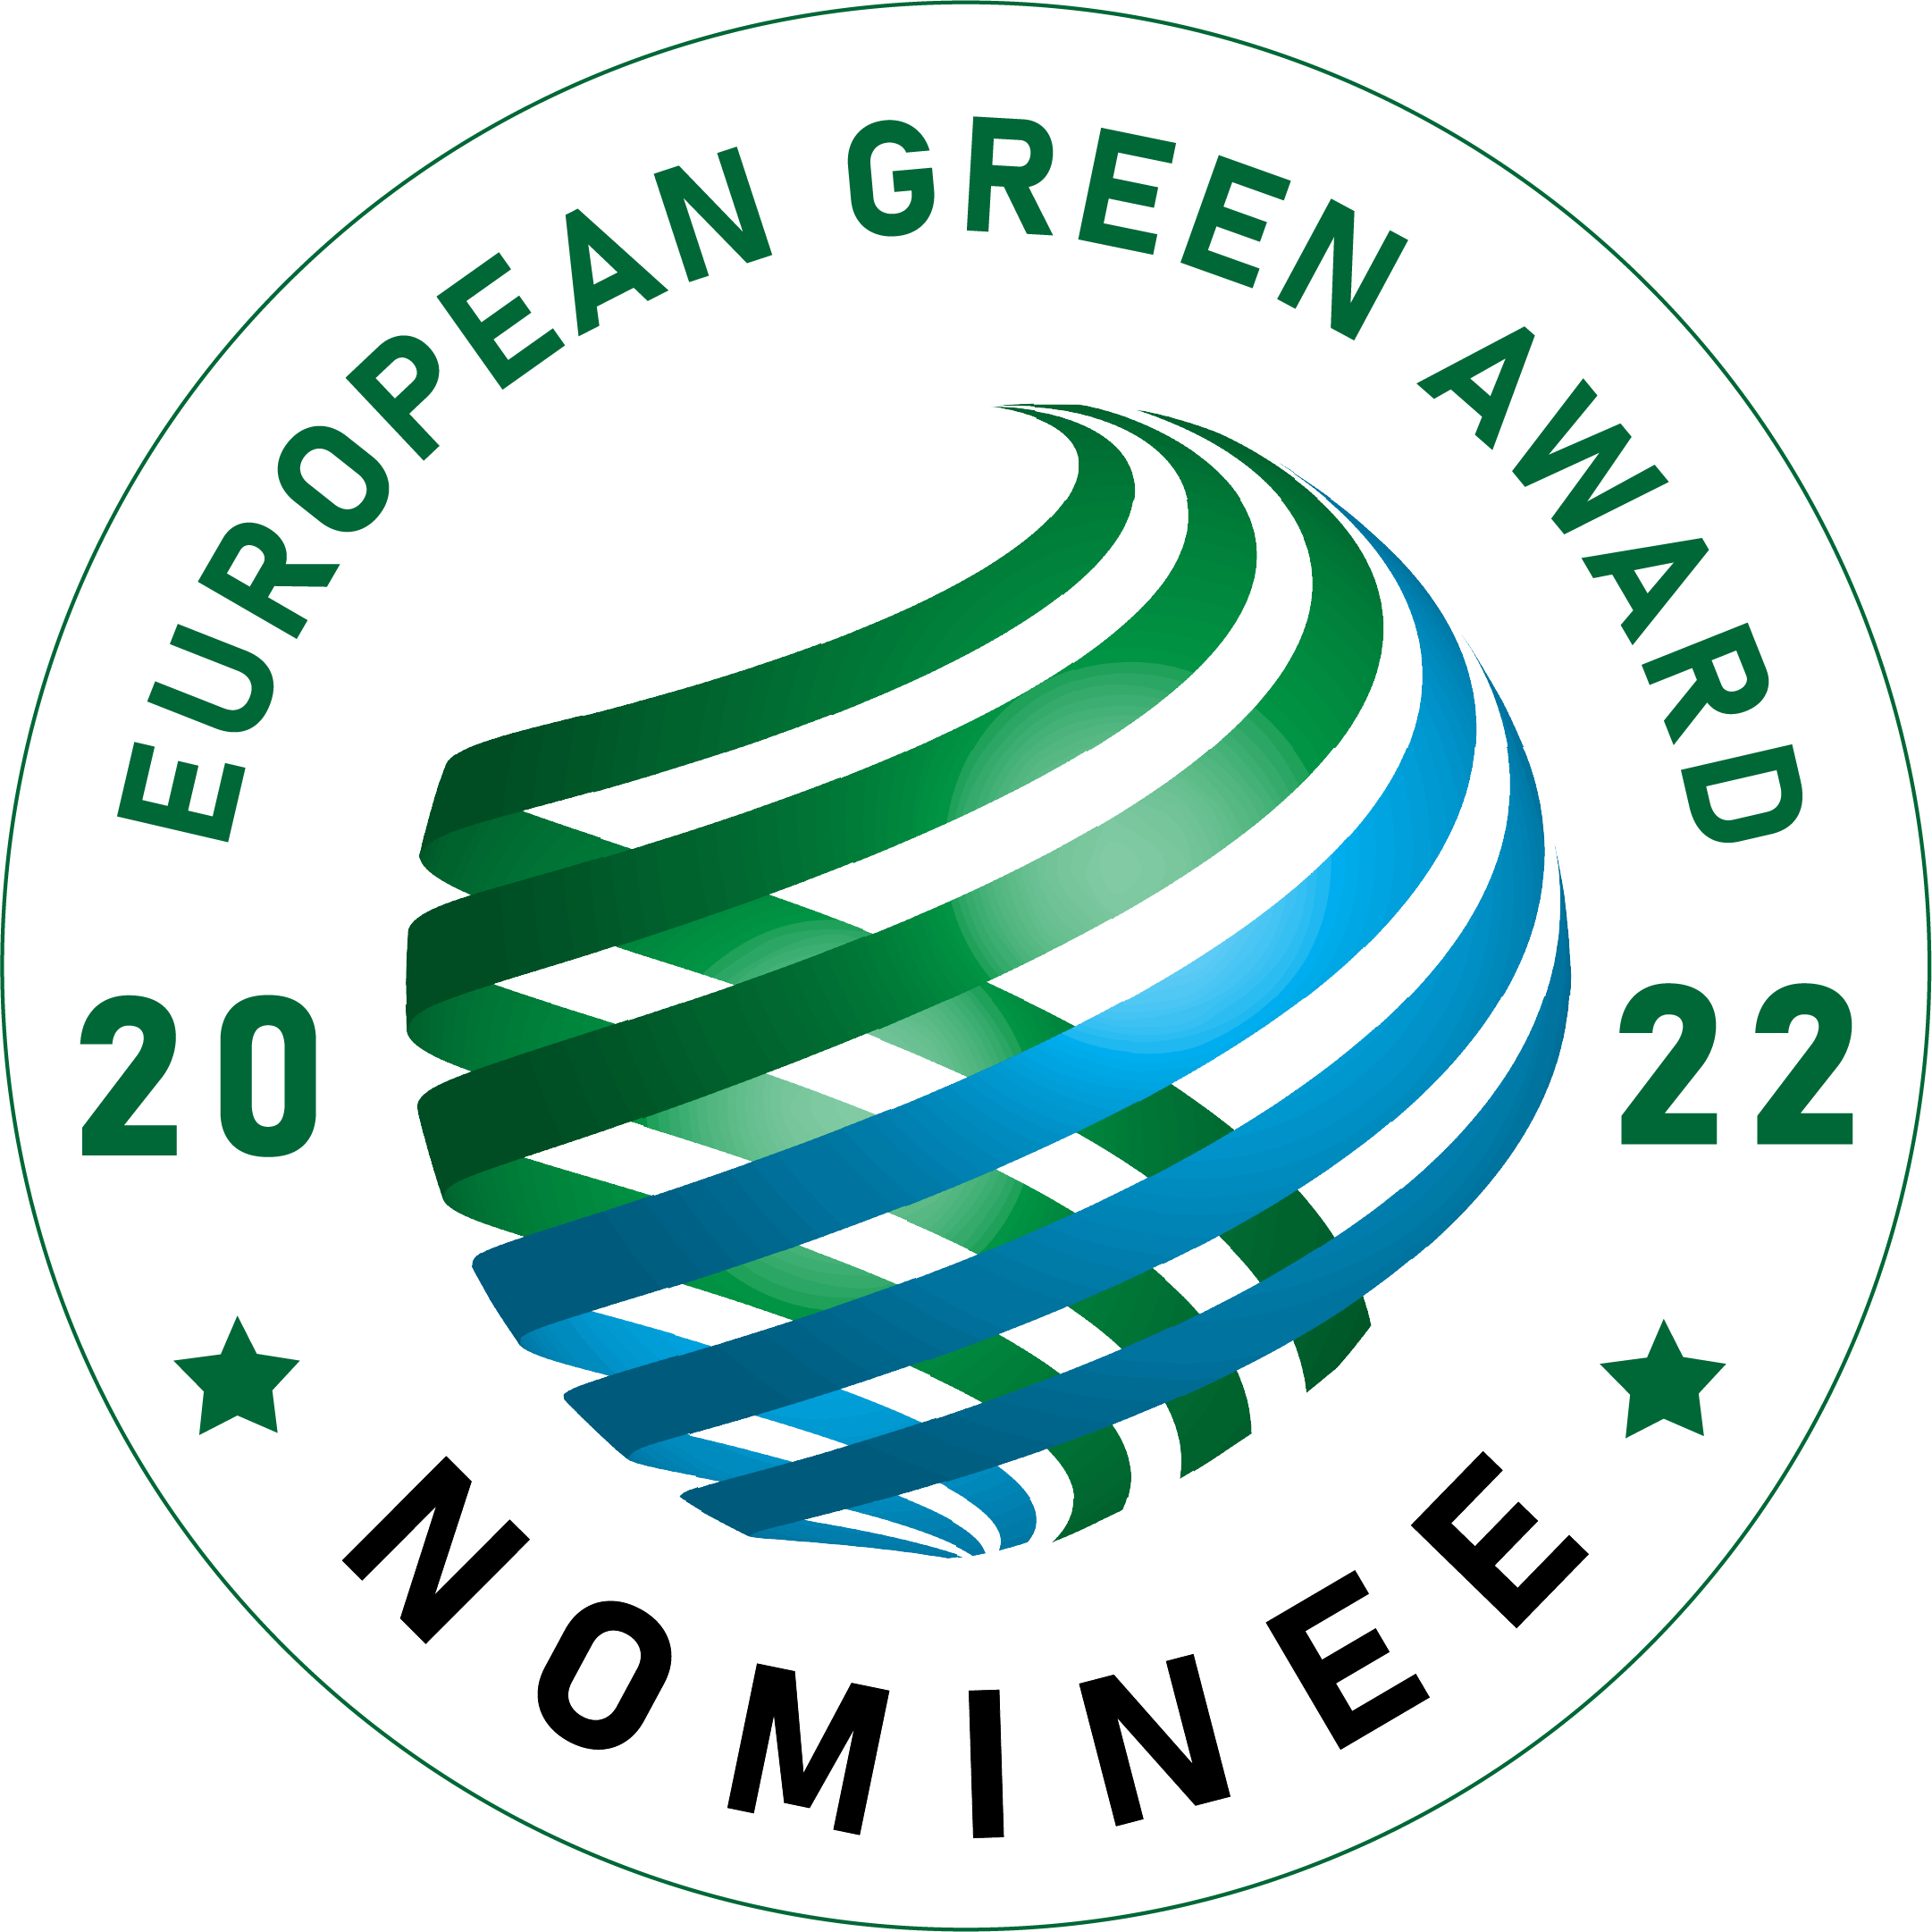 European Green Award